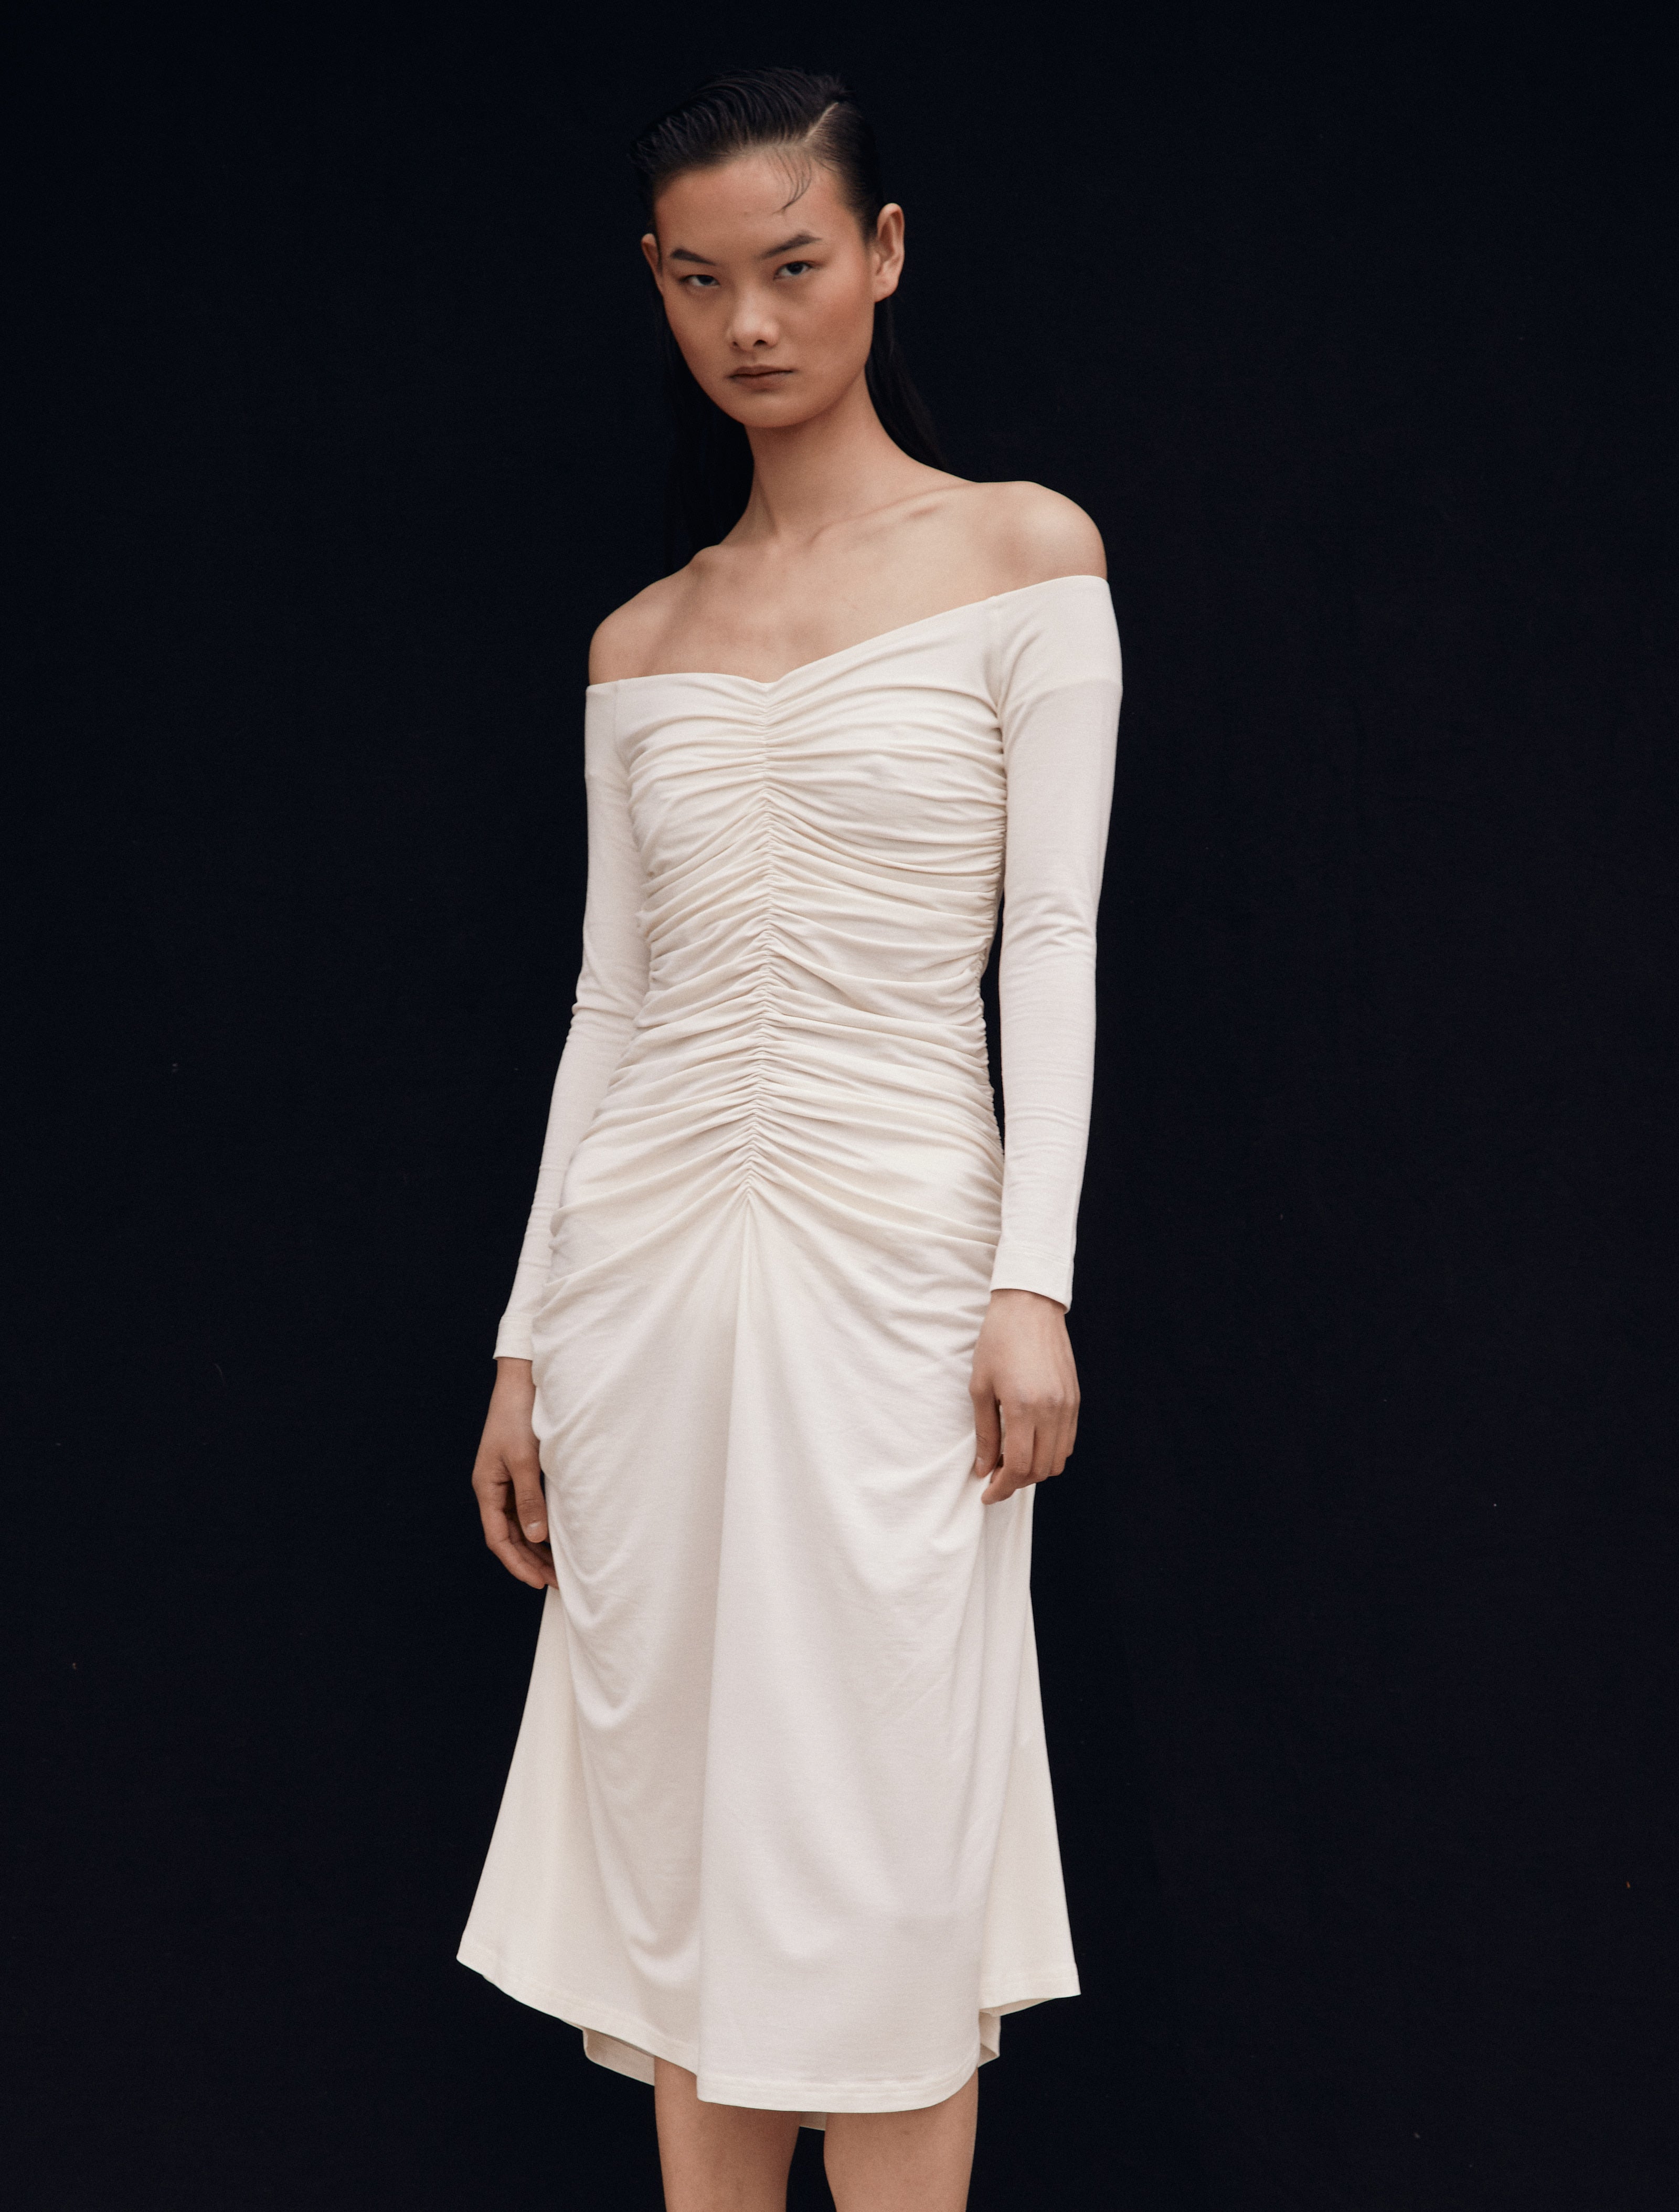 Ninety Percent Osha Dress in White